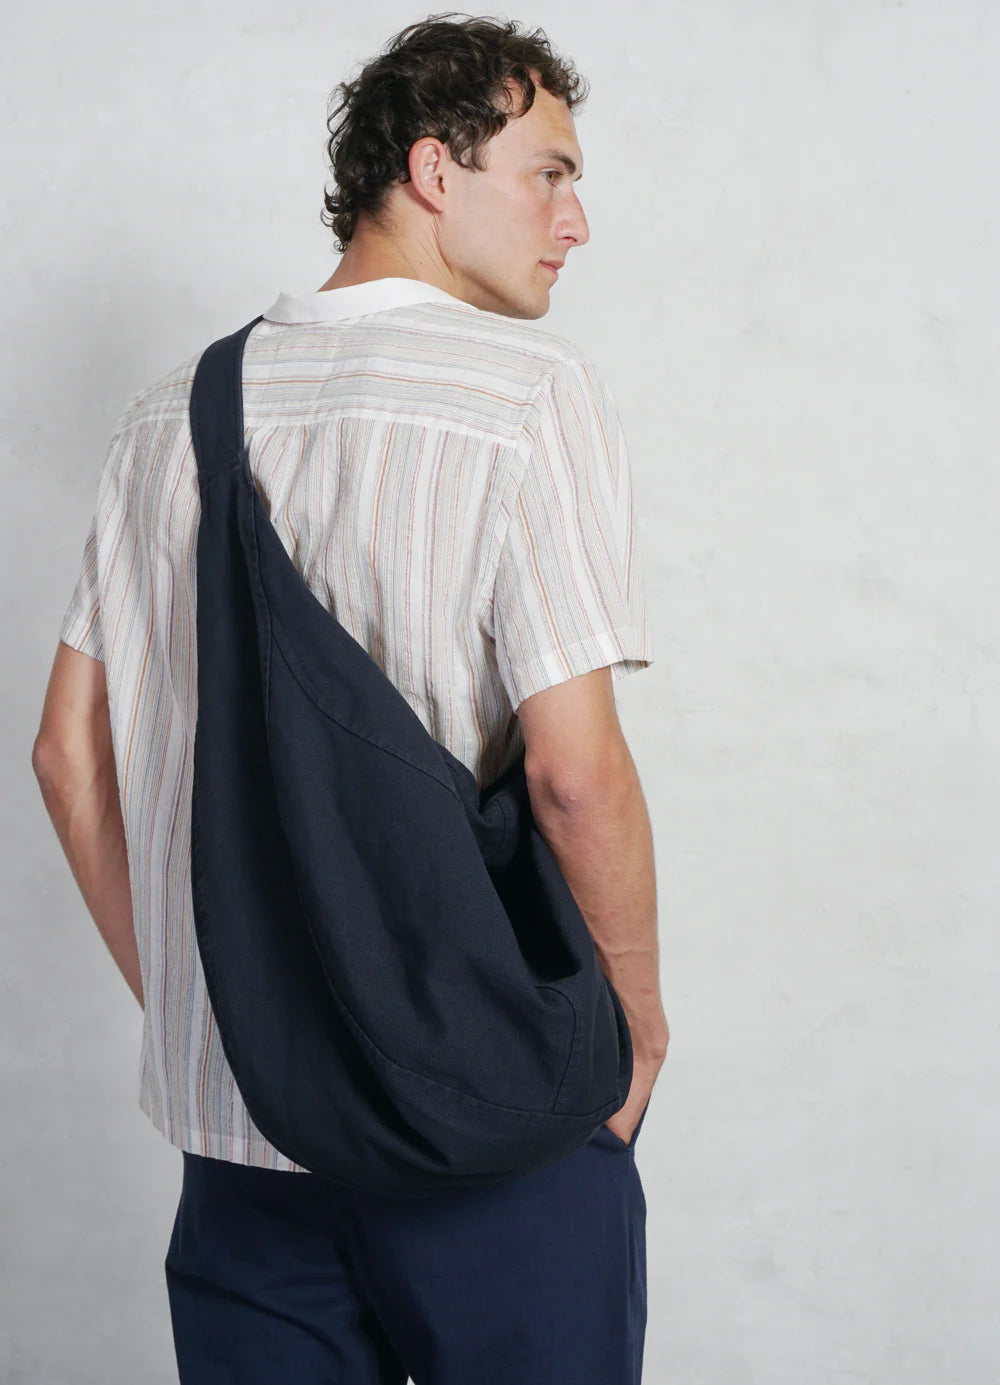 Hansen Garments Philip Short Sleeve Pull-On Shirt in vanilla